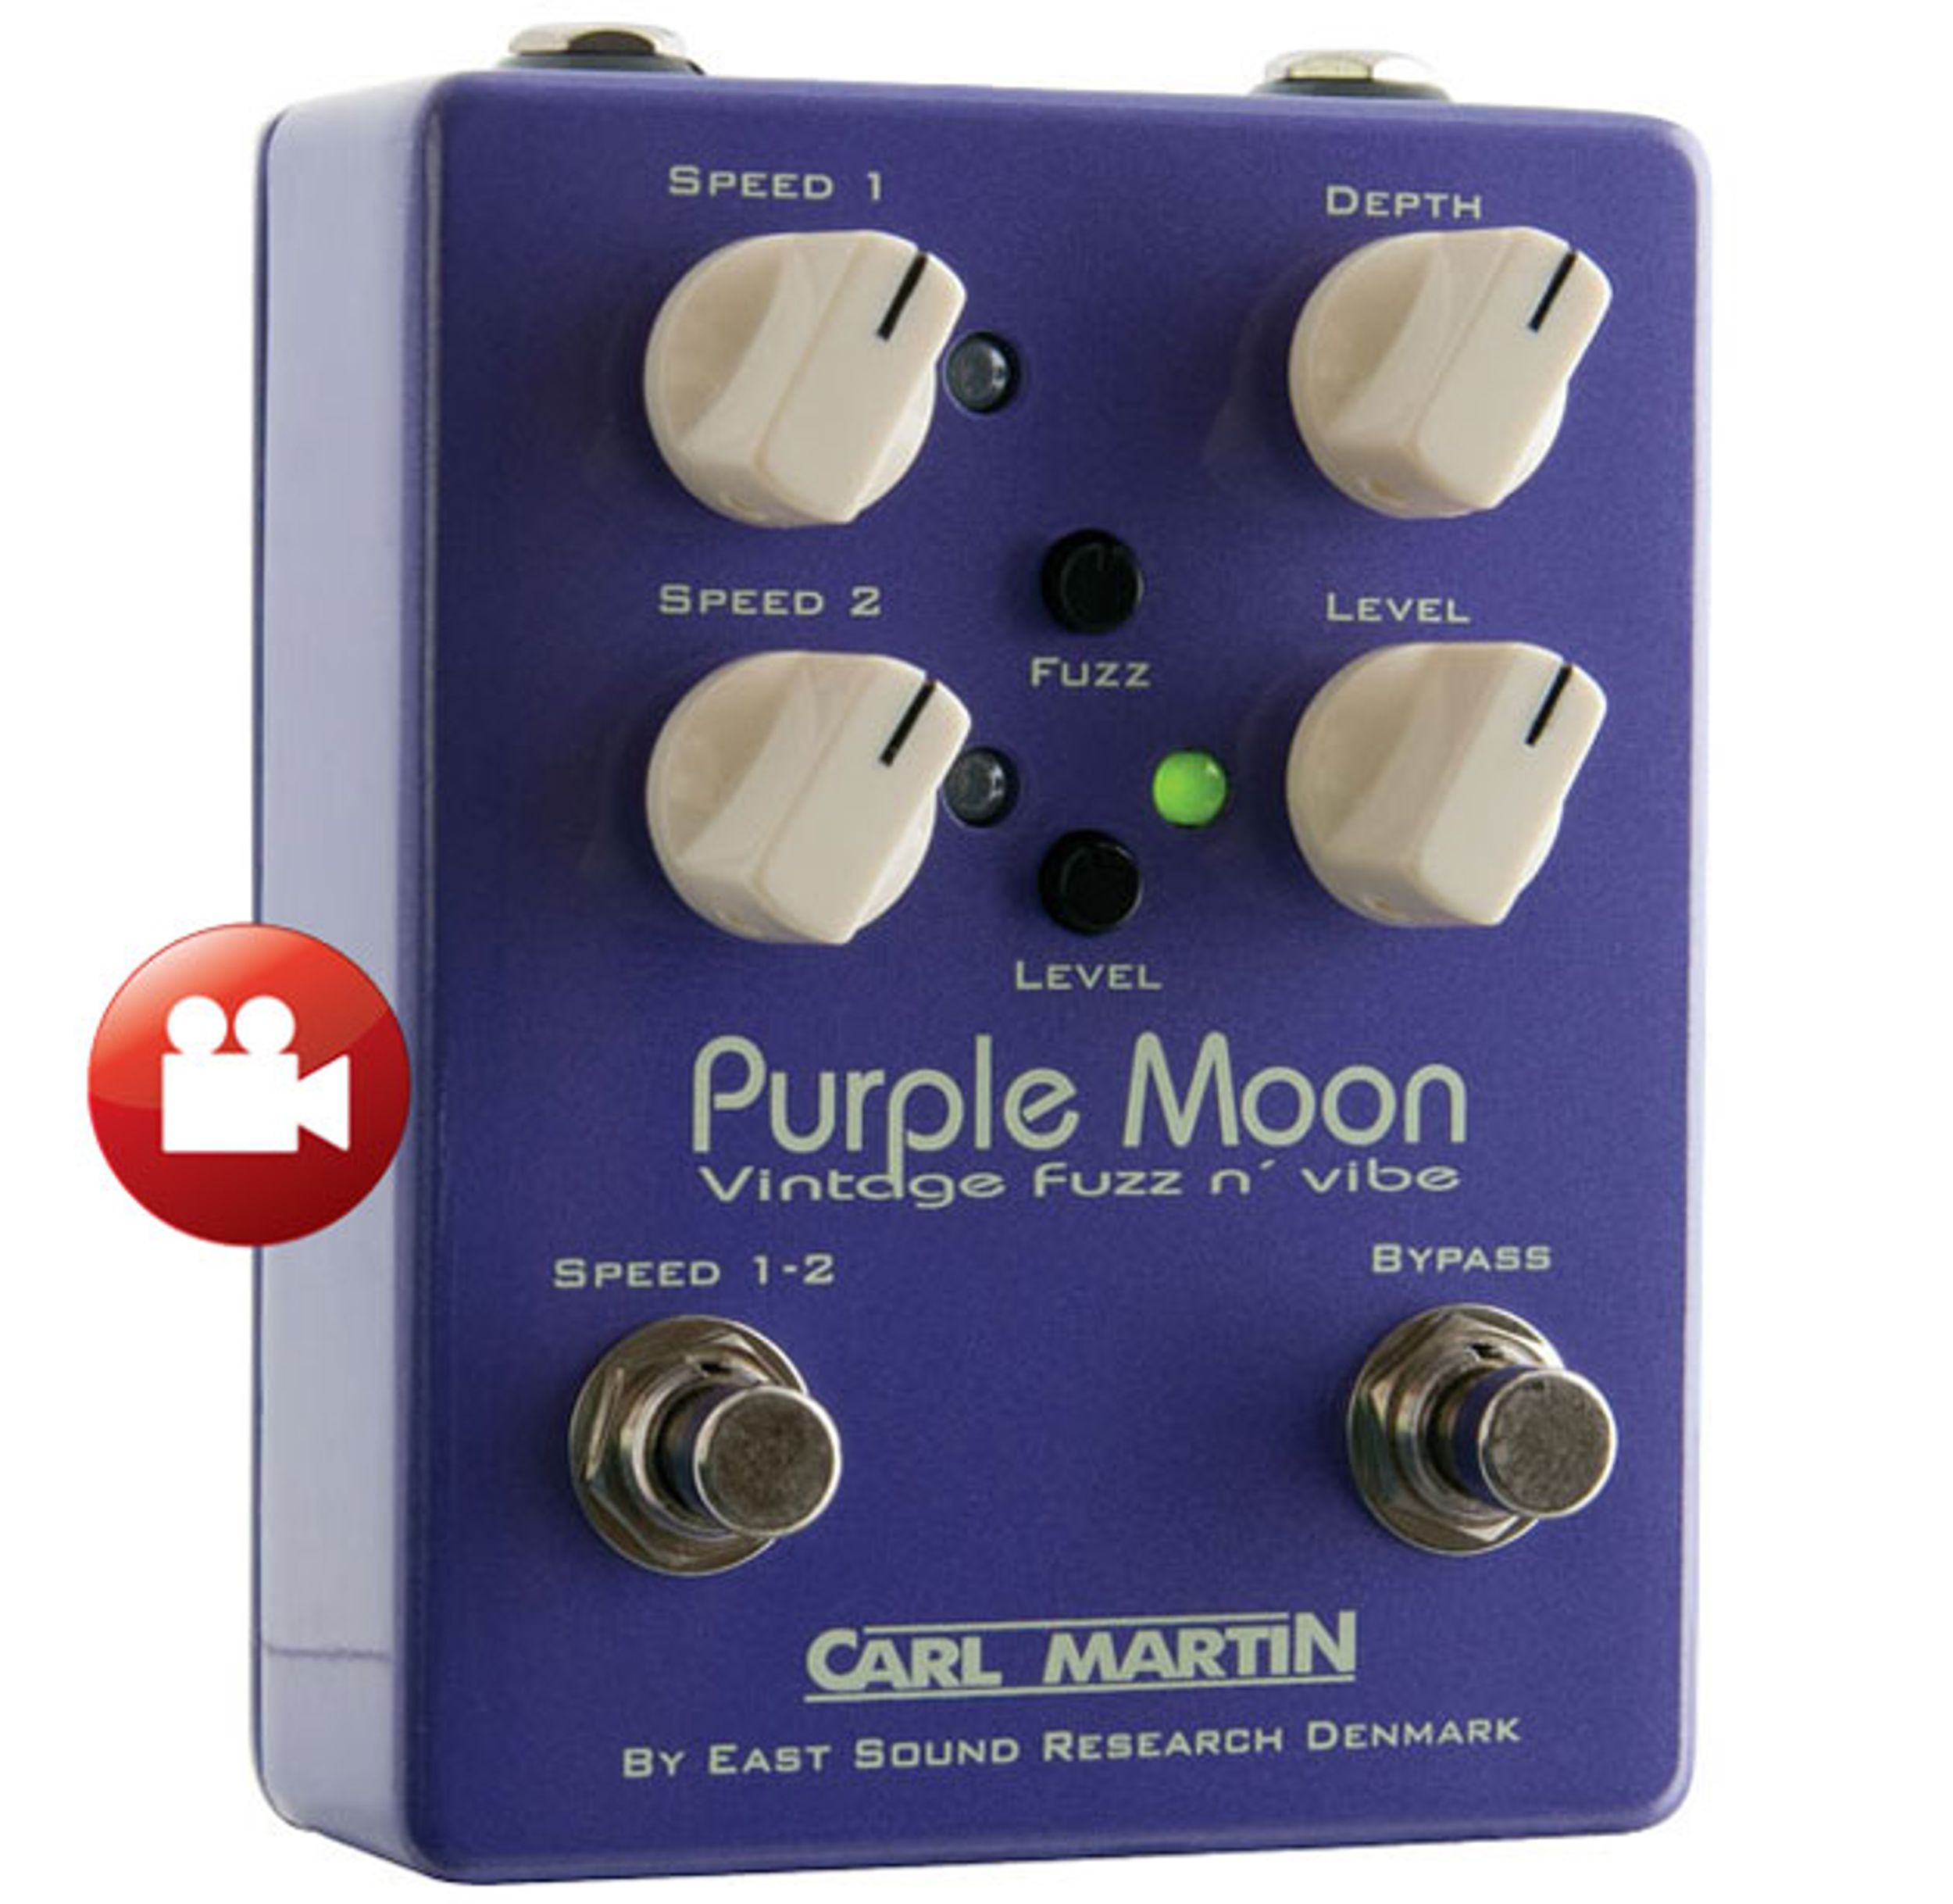 Carl Martin Purple Moon Vintage Fuzz n' Vibe Review